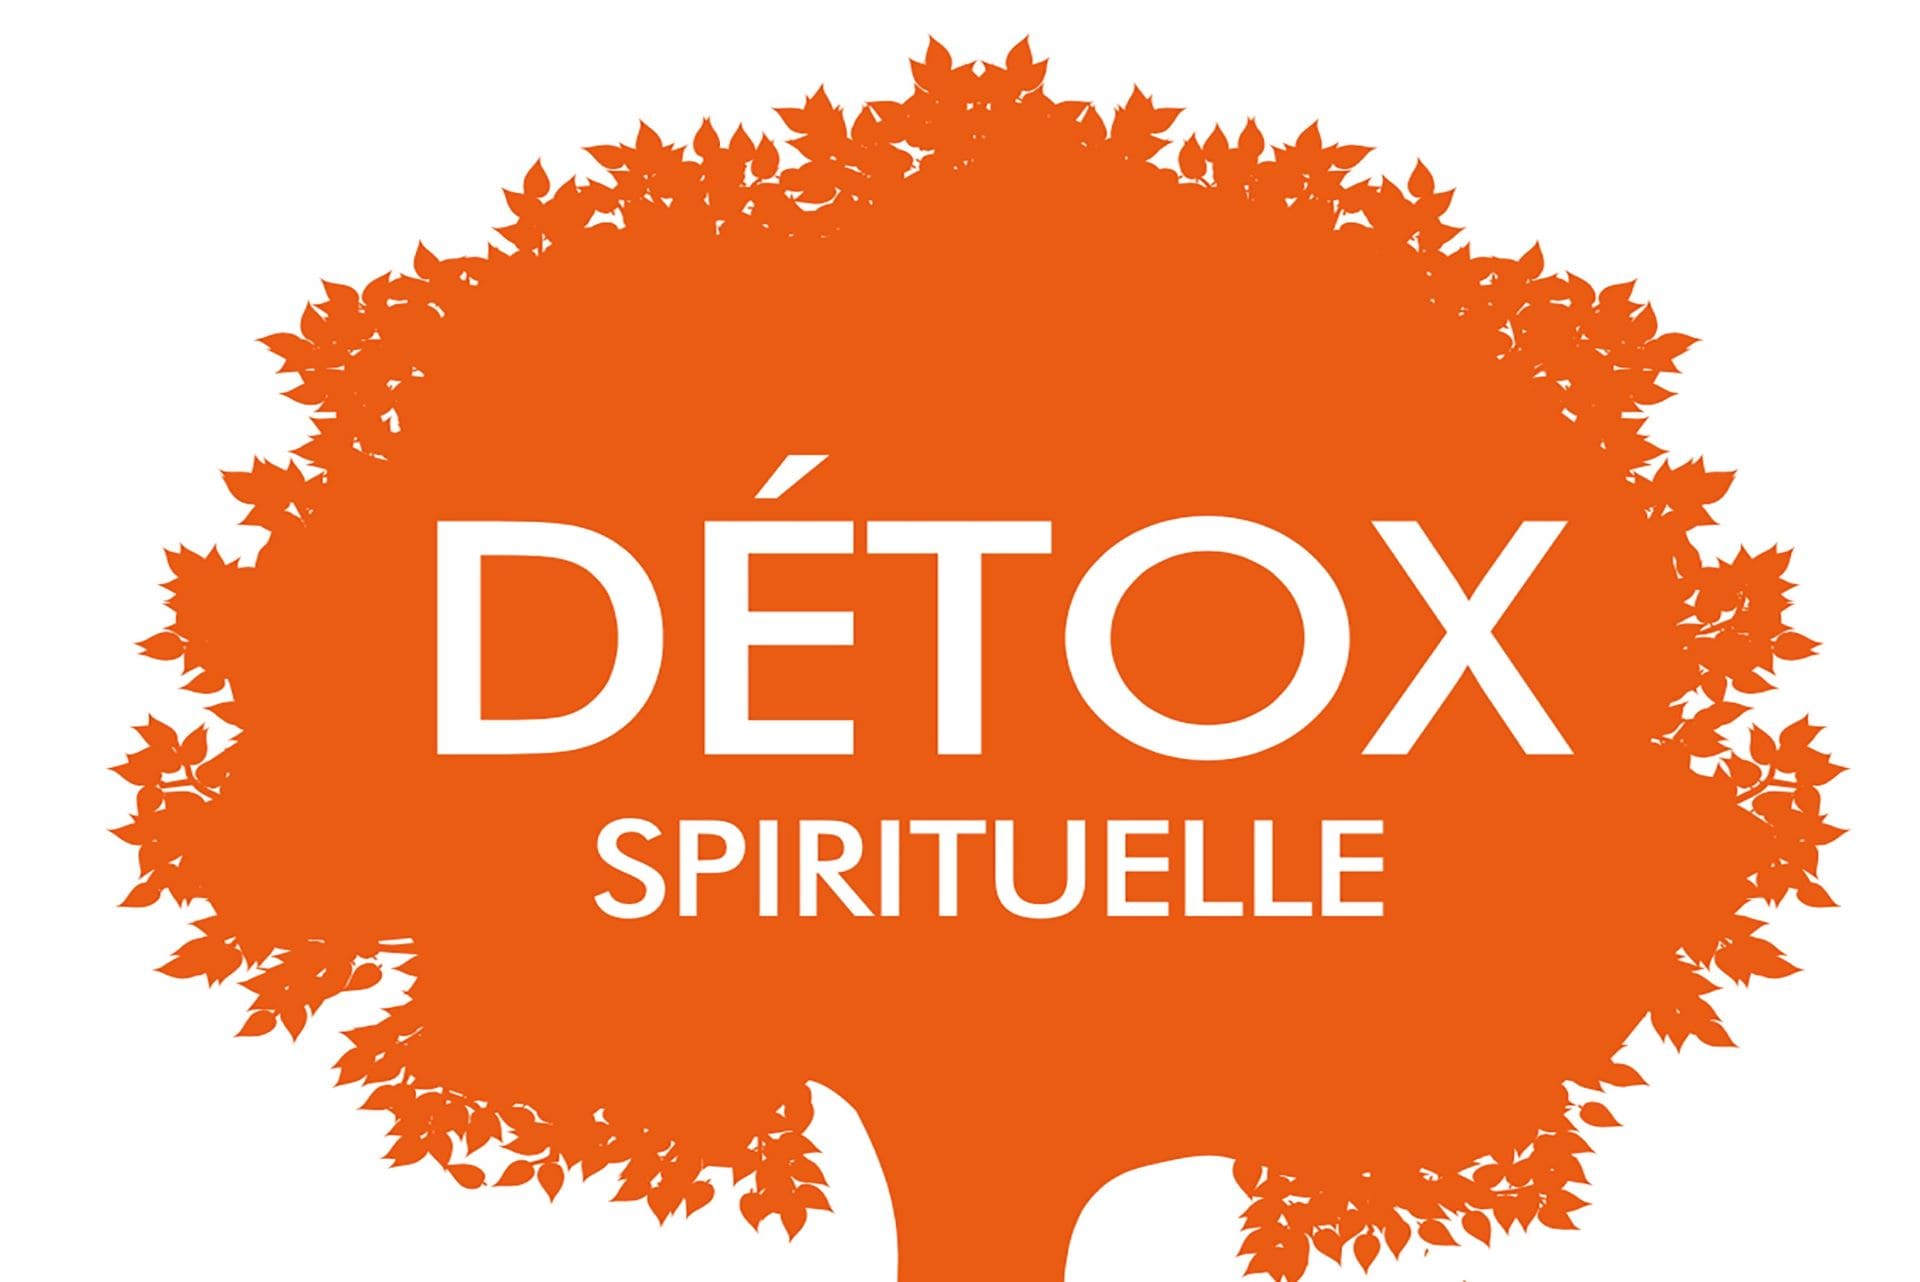 Détox spirituelle - Dr. Habib Sadeghi